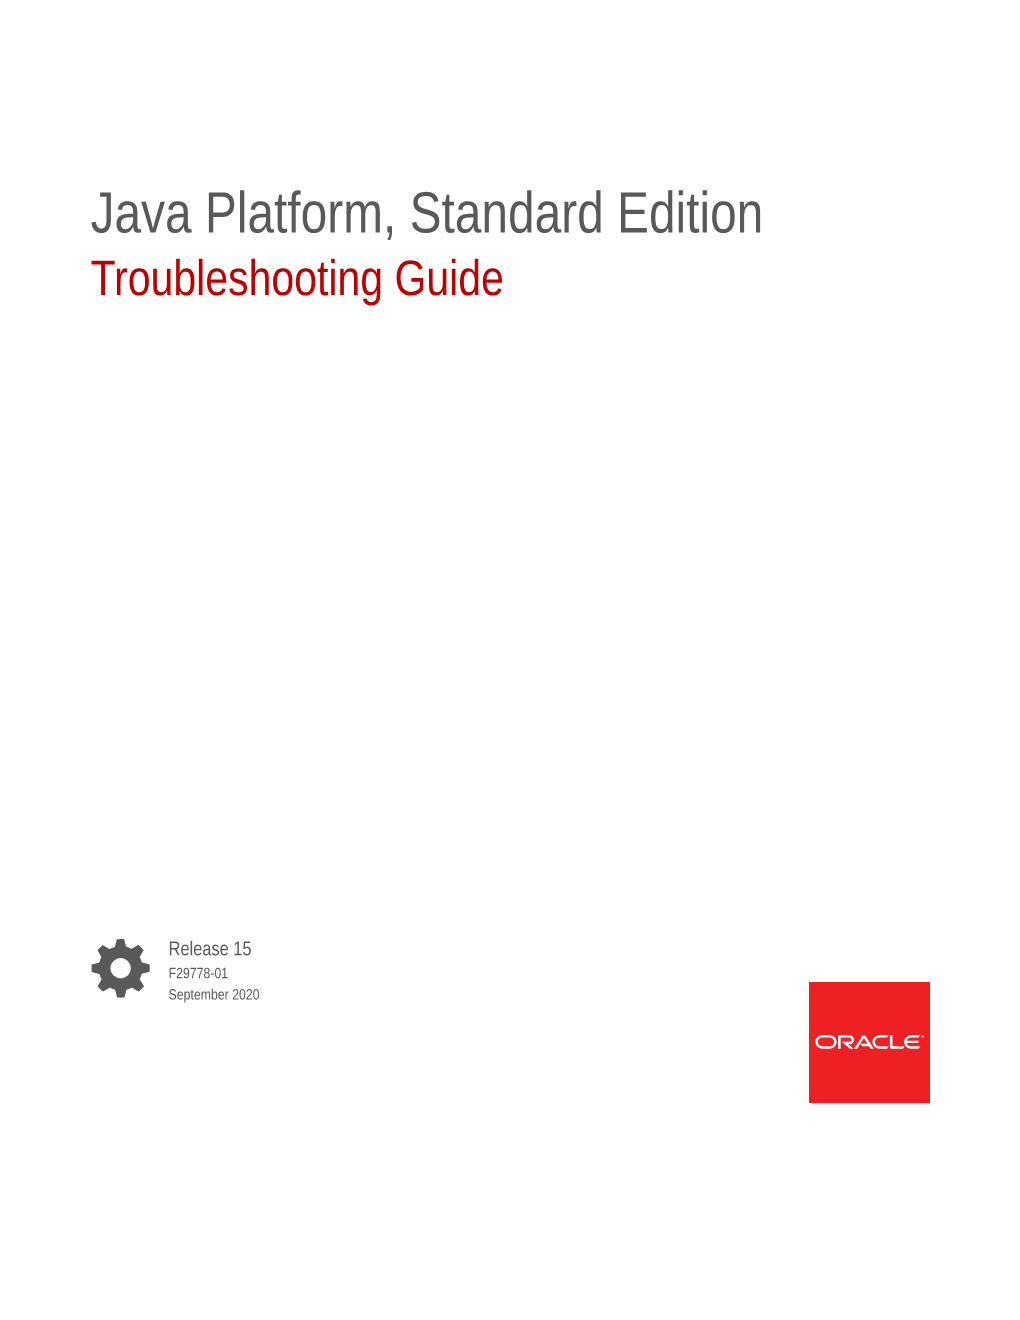 Java Platform, Standard Edition Troubleshooting Guide